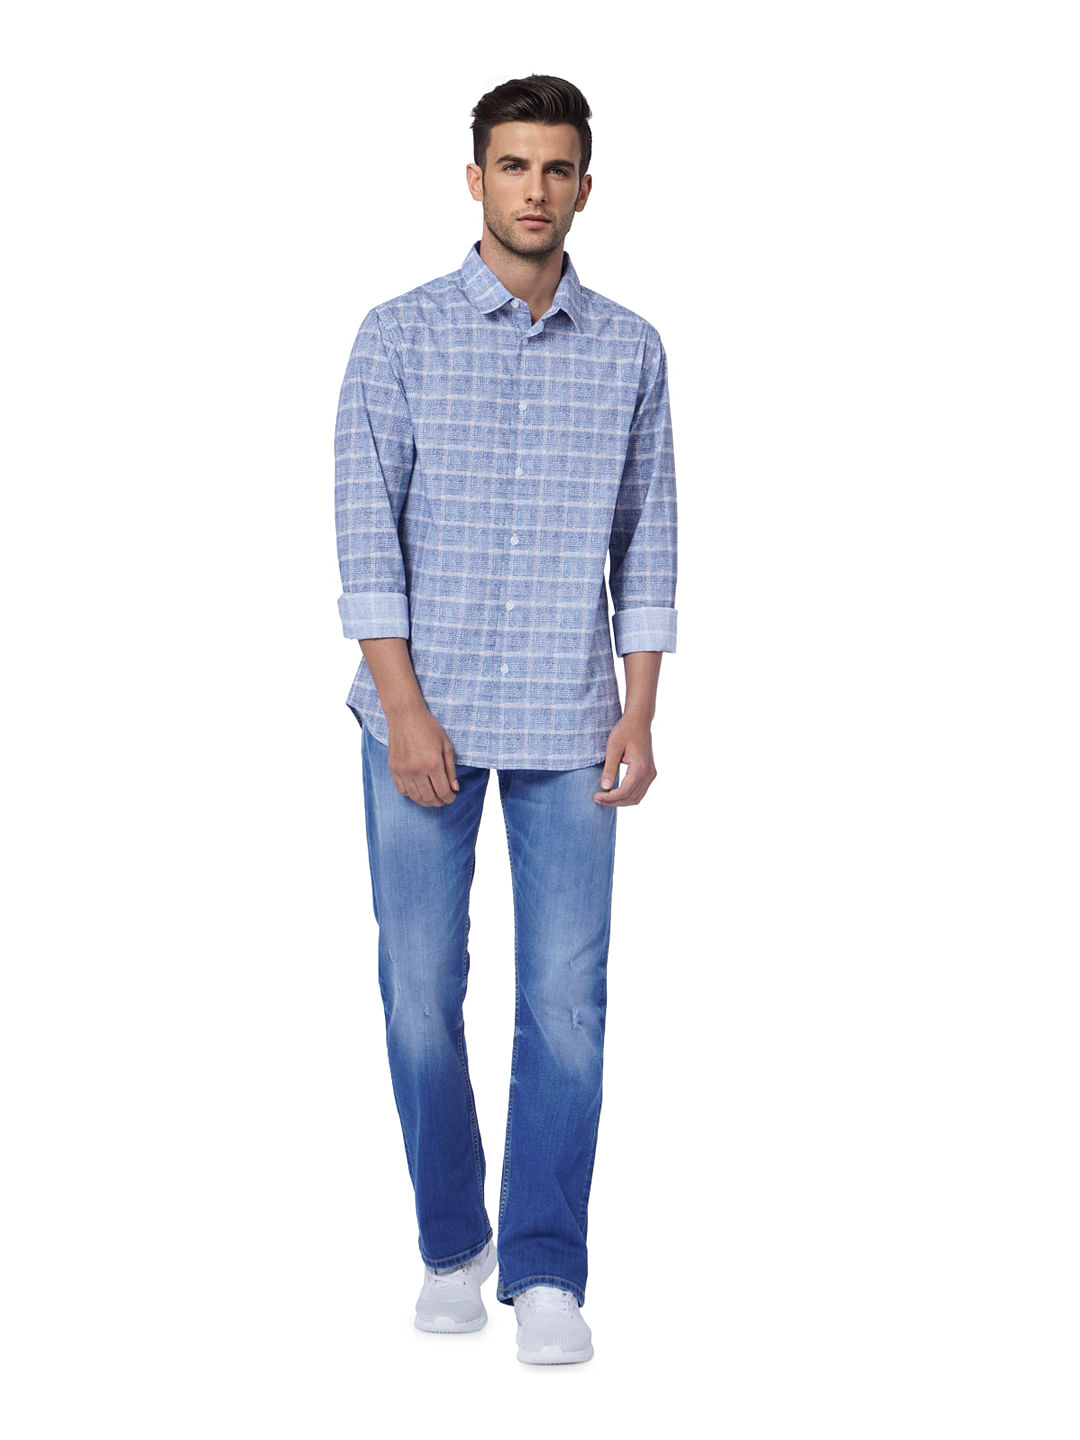 Buy Men Blue Printed Shirt Online in India - Monte Carlo